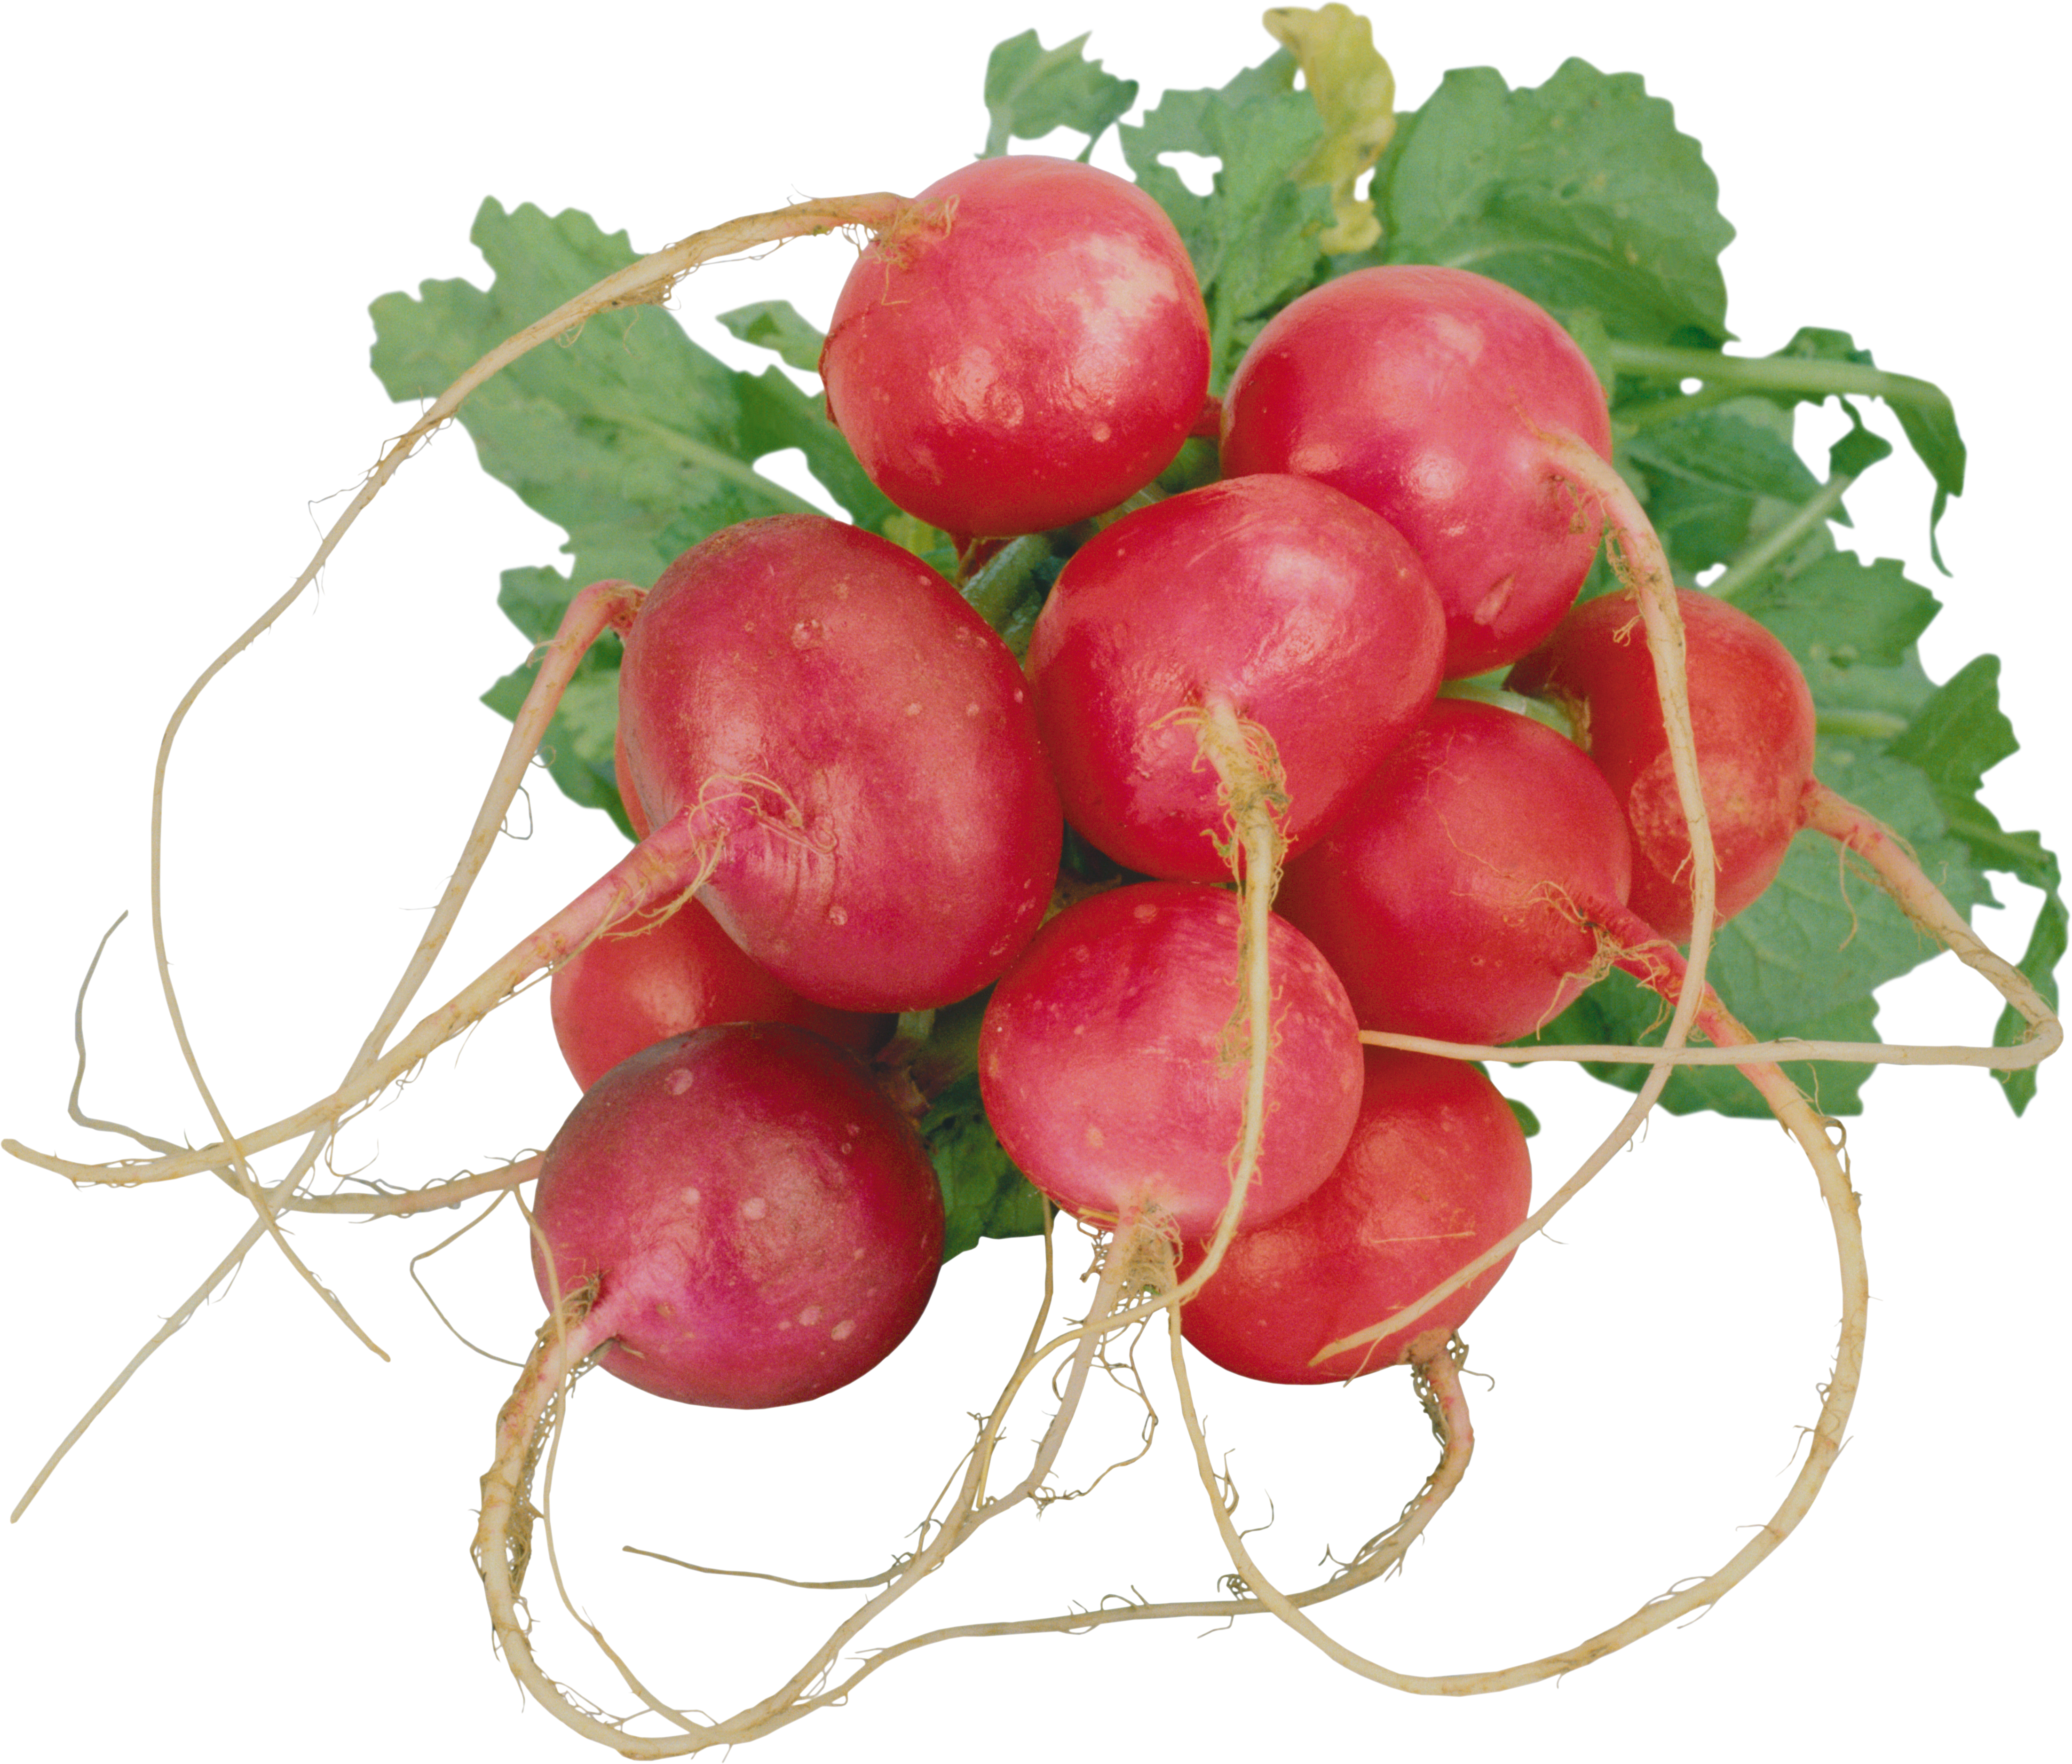 Image de fond radis rouge radis rouge